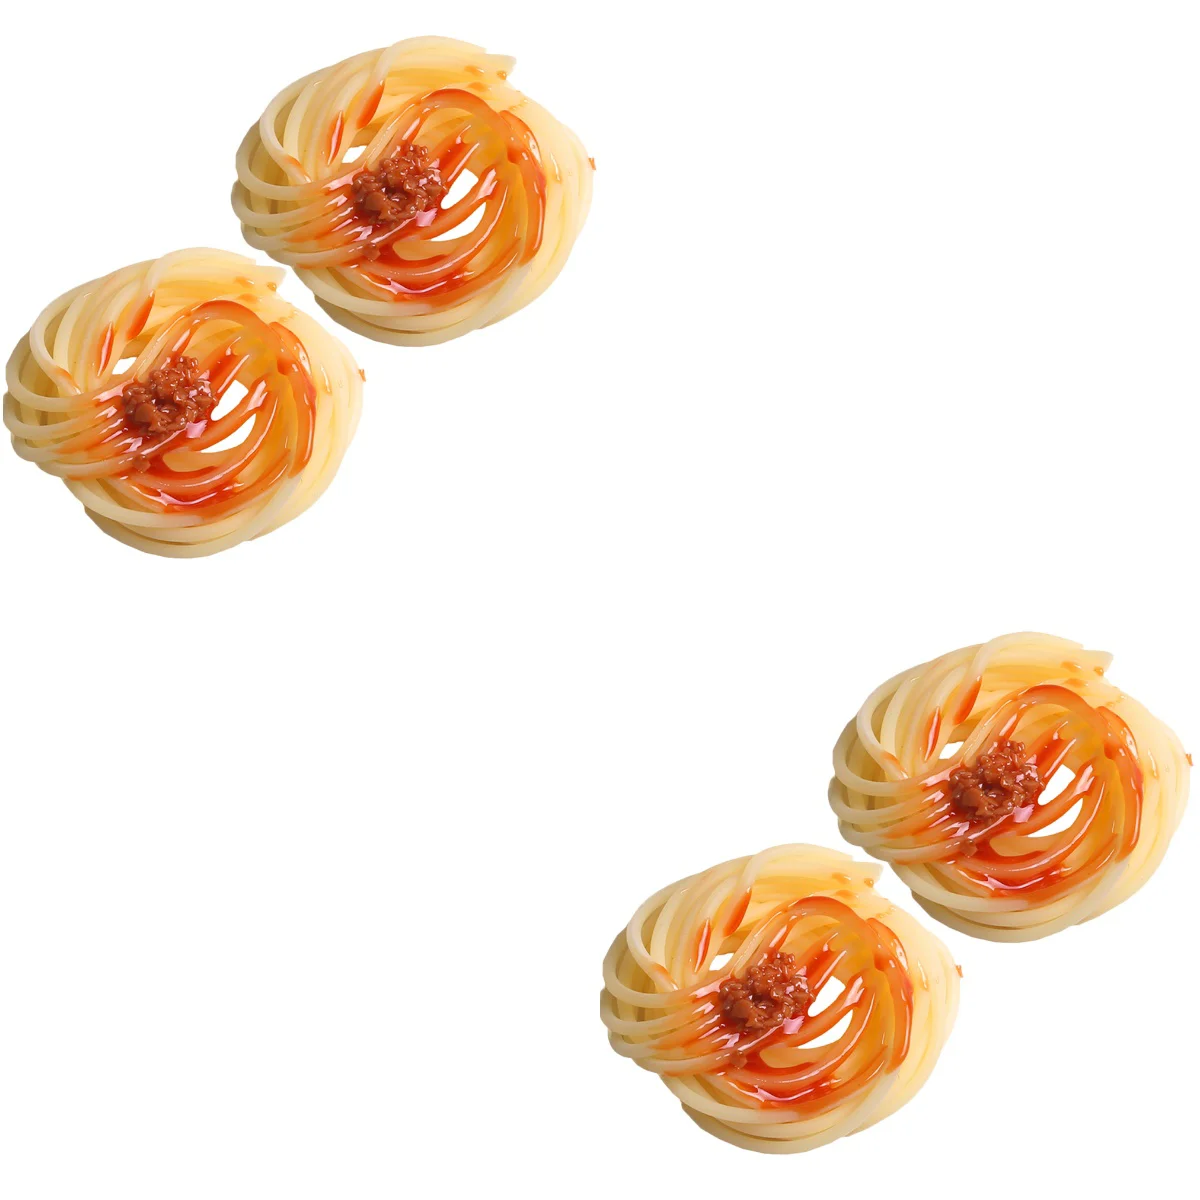 

4 Pcs Pasta Artificial Sauce Italian Showcase Food Spaghetti Props Models Pvc Fake Simulated Decor Child